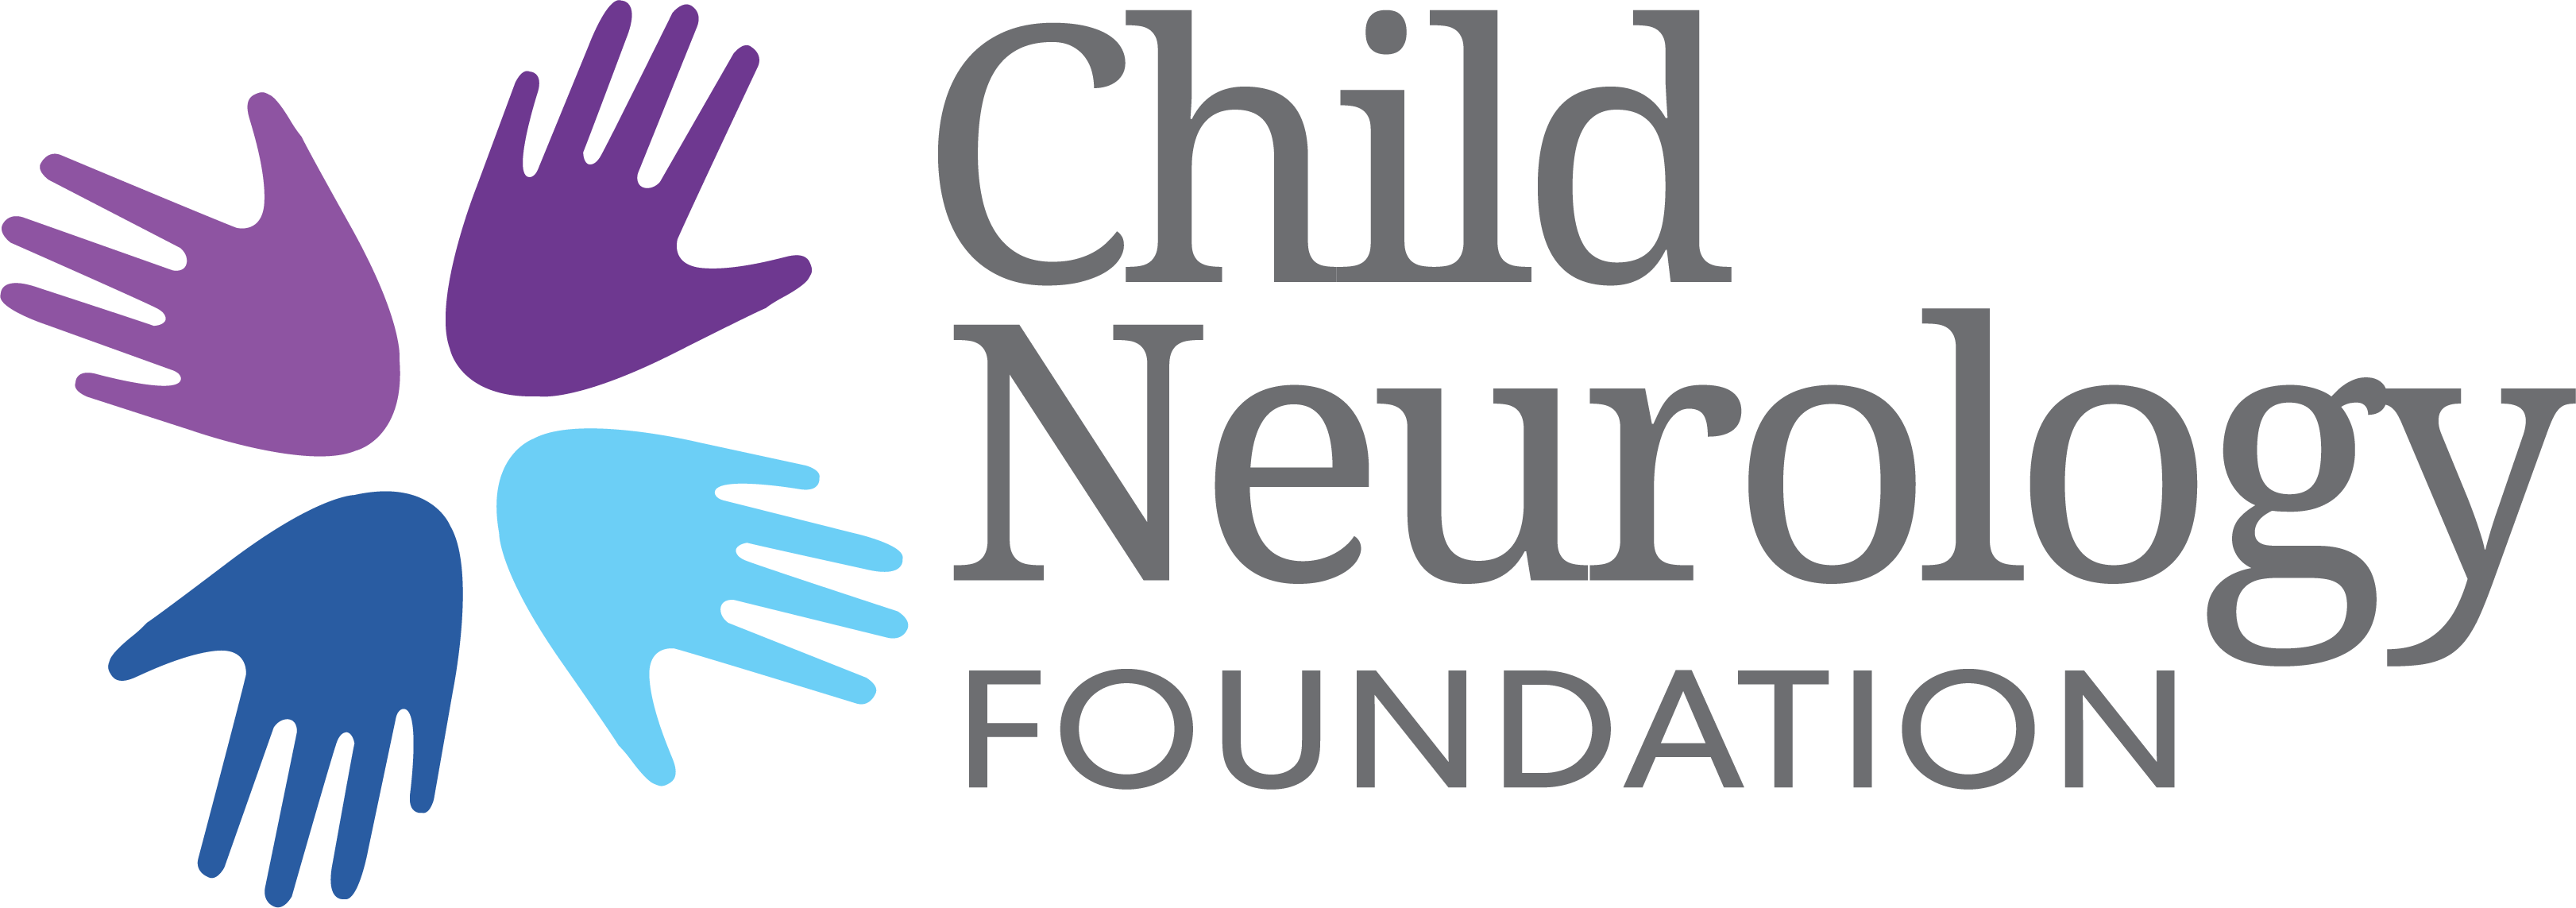 Child Neurology Foundation logo